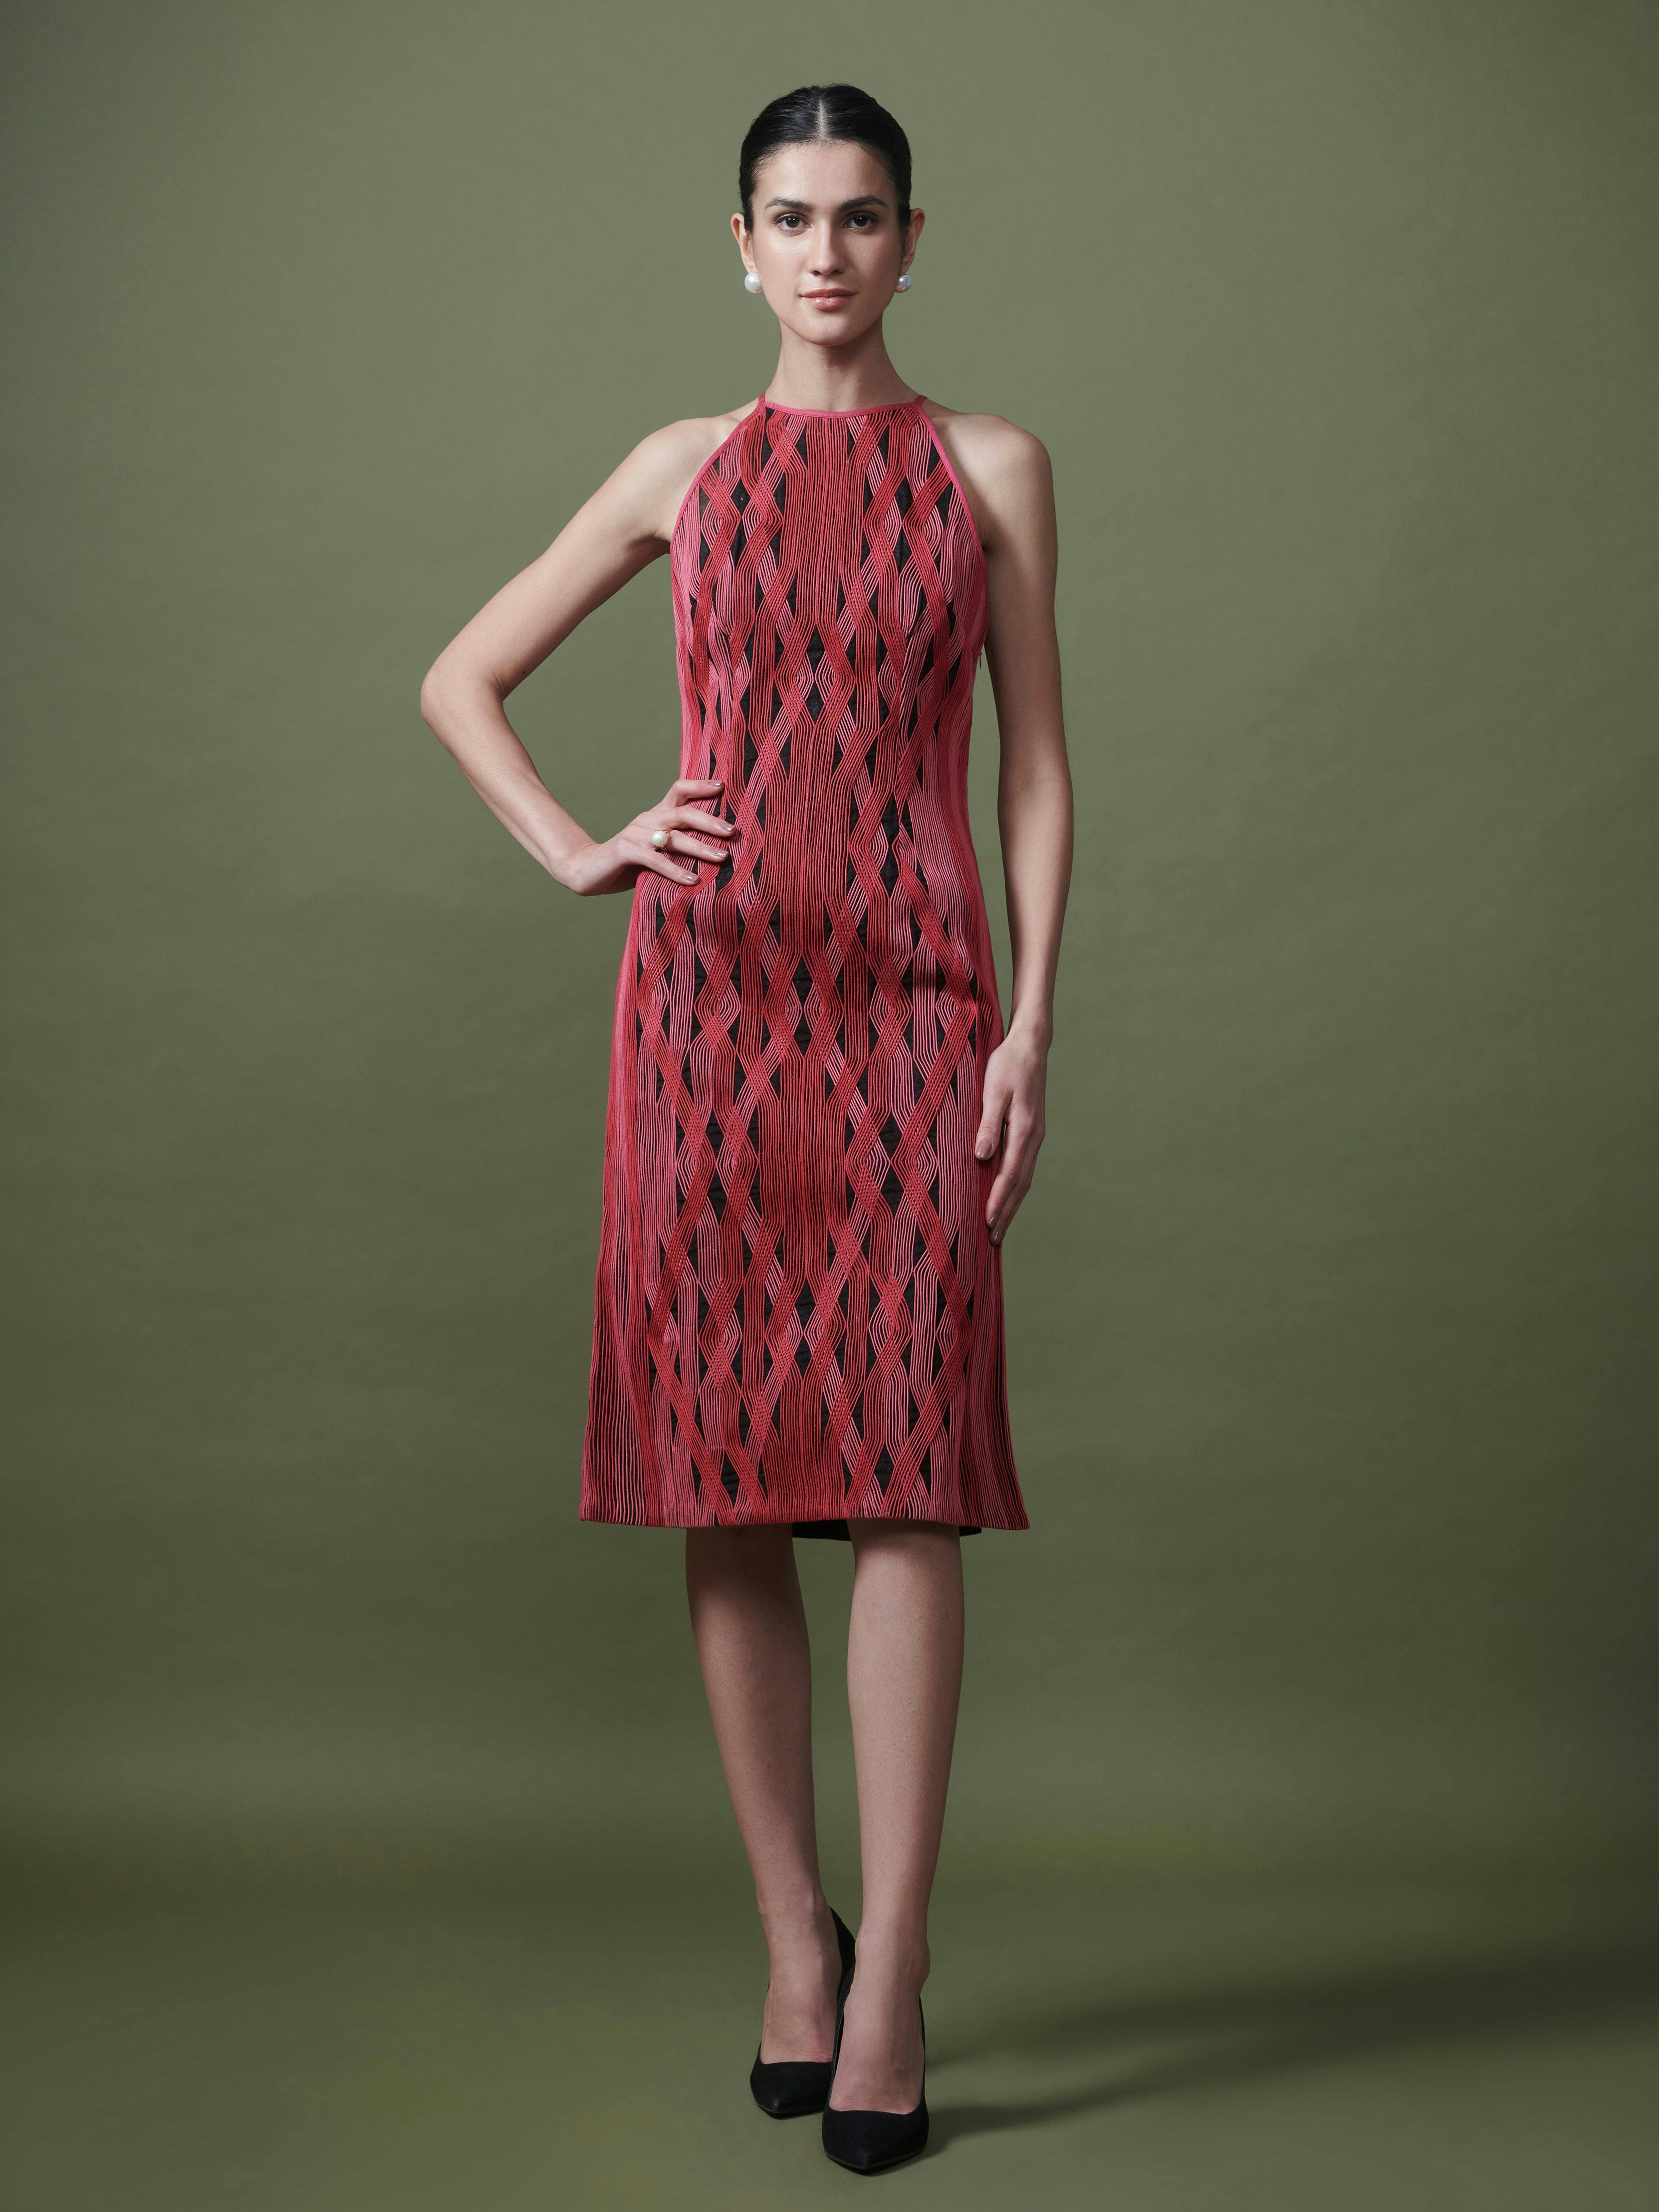 Entwined corded dress, a product by Shriya Khanna